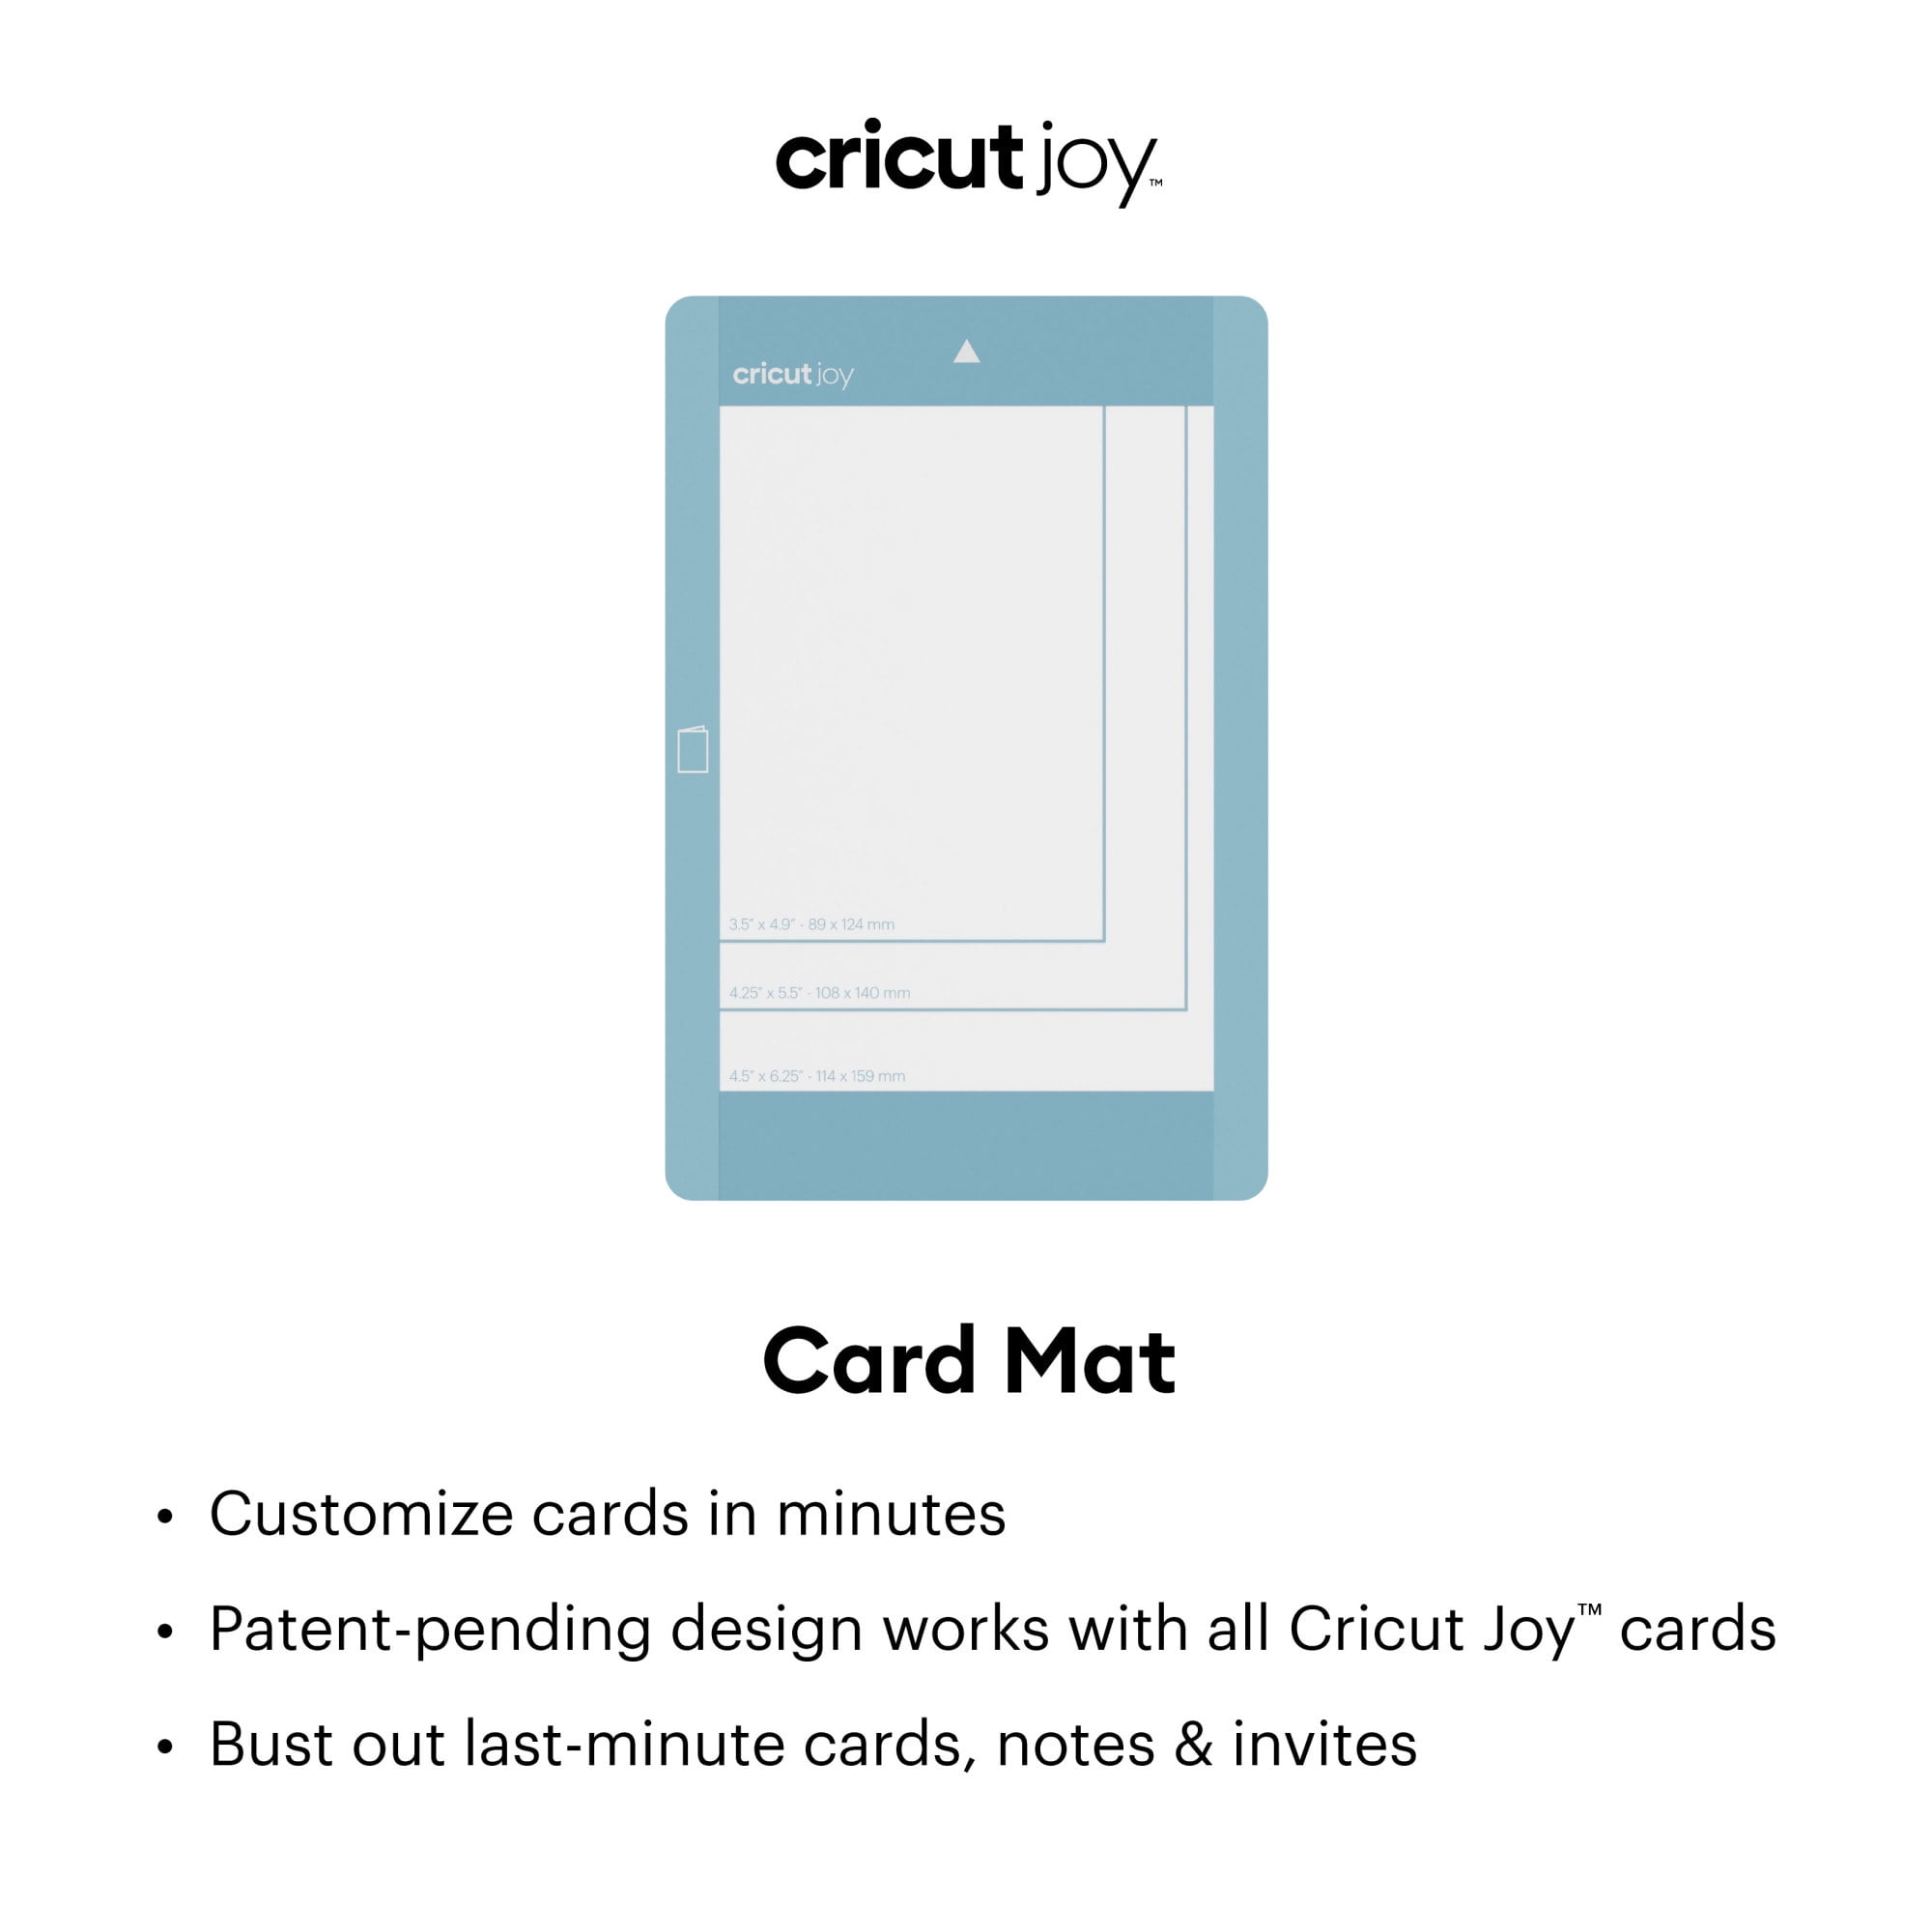 Cricut Joy Card Mat 4.5x6.25 